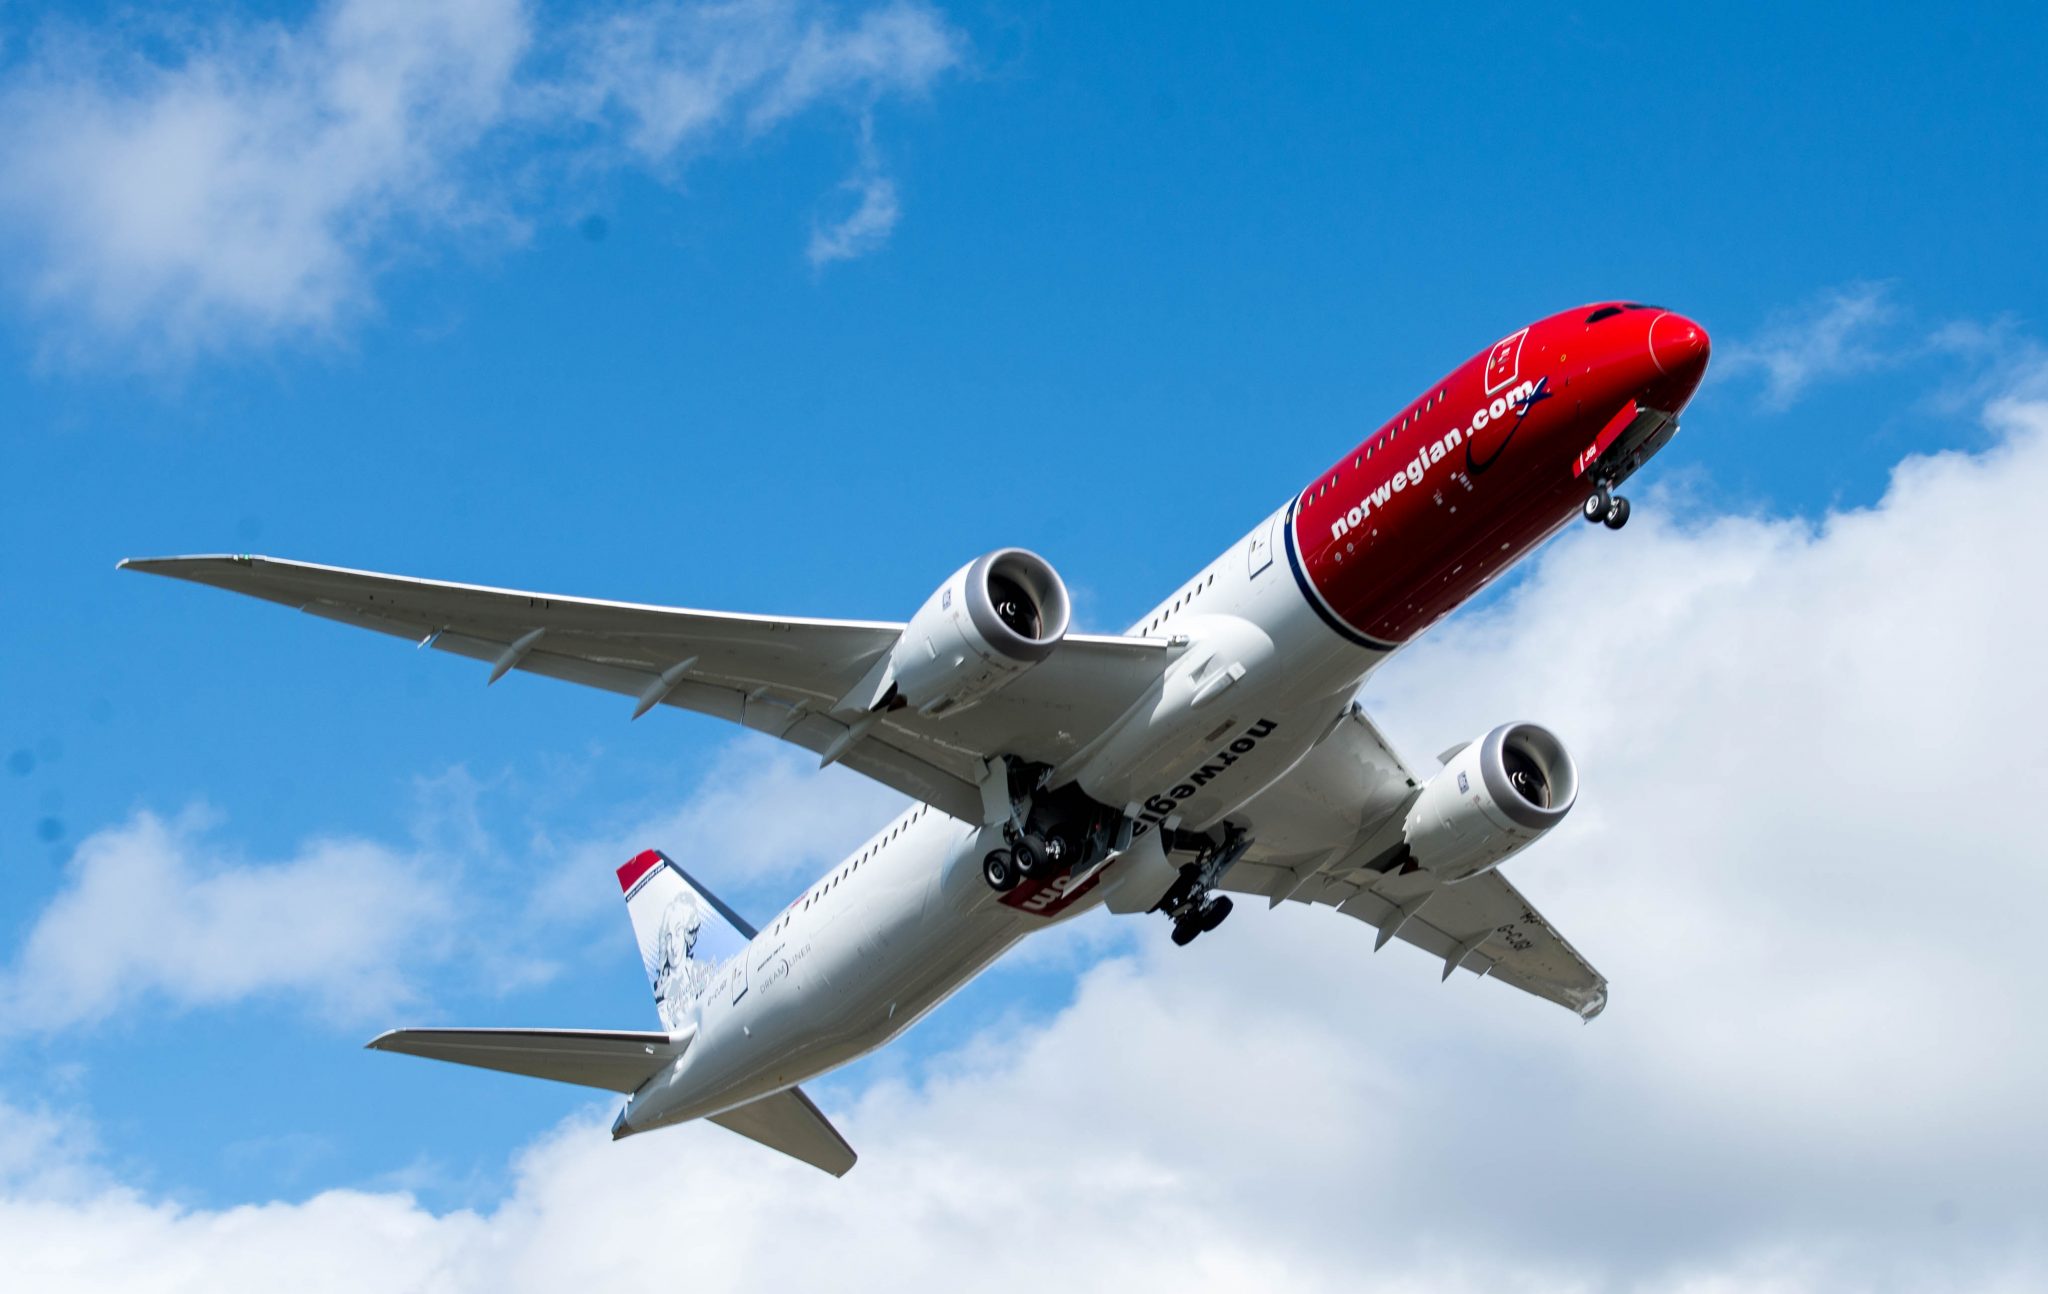 Norwegian flew 1.5 million passengers in March 2023, anticipates packed summer schedule